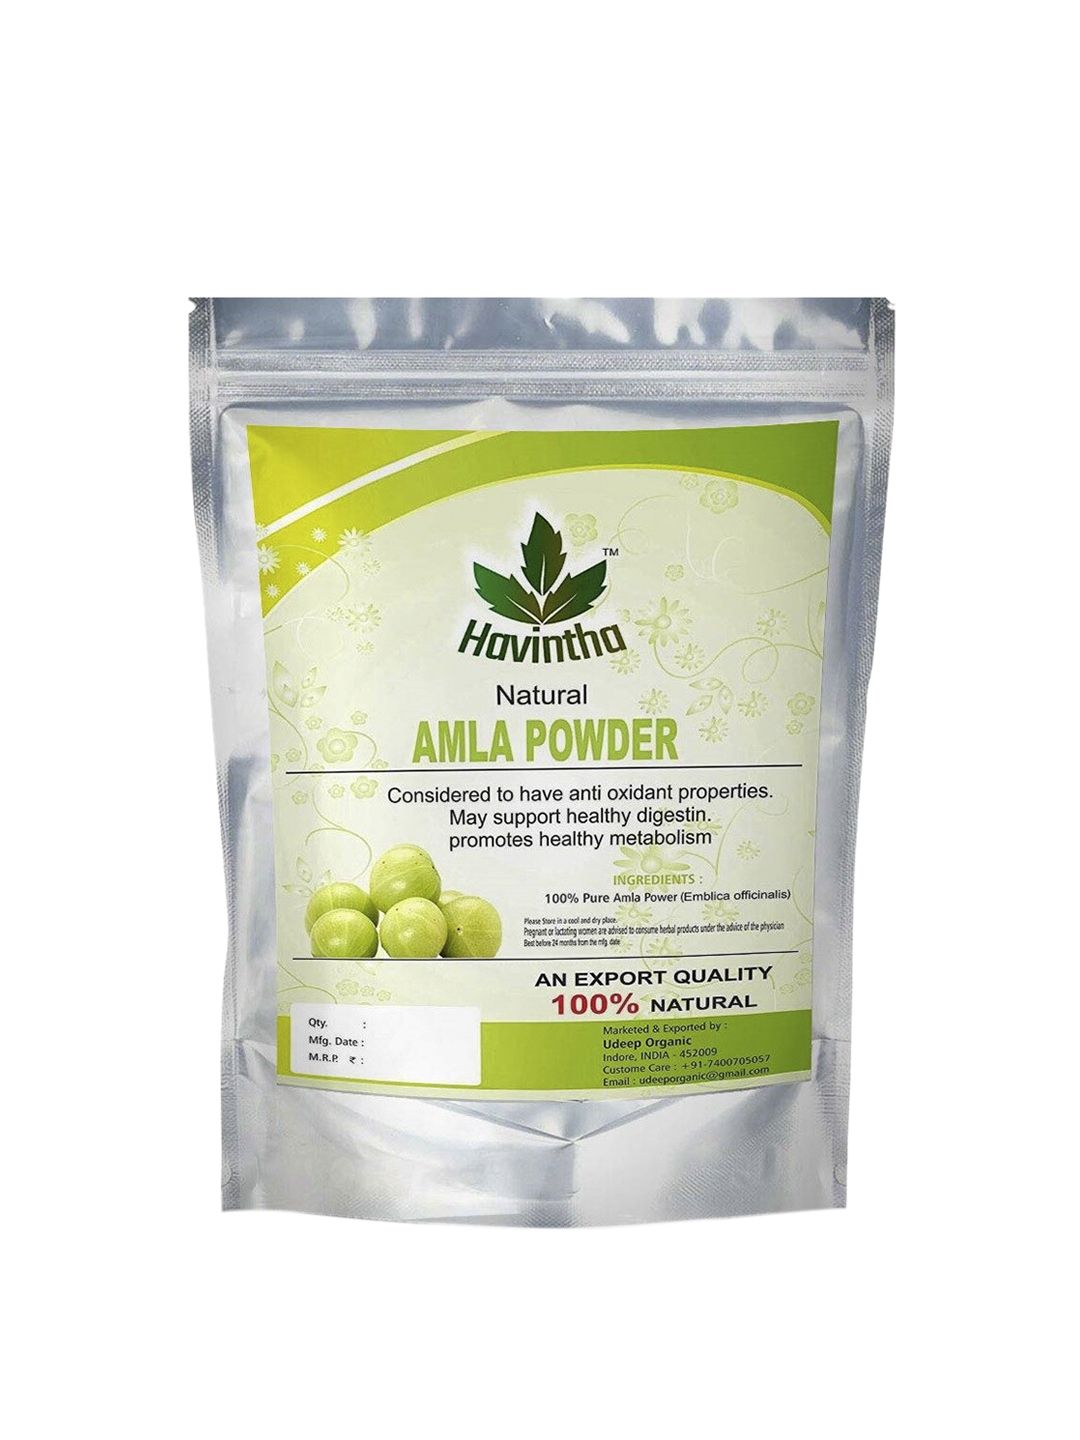 Havintha Amla Powder for Hair Growth 227 Gm Price in India